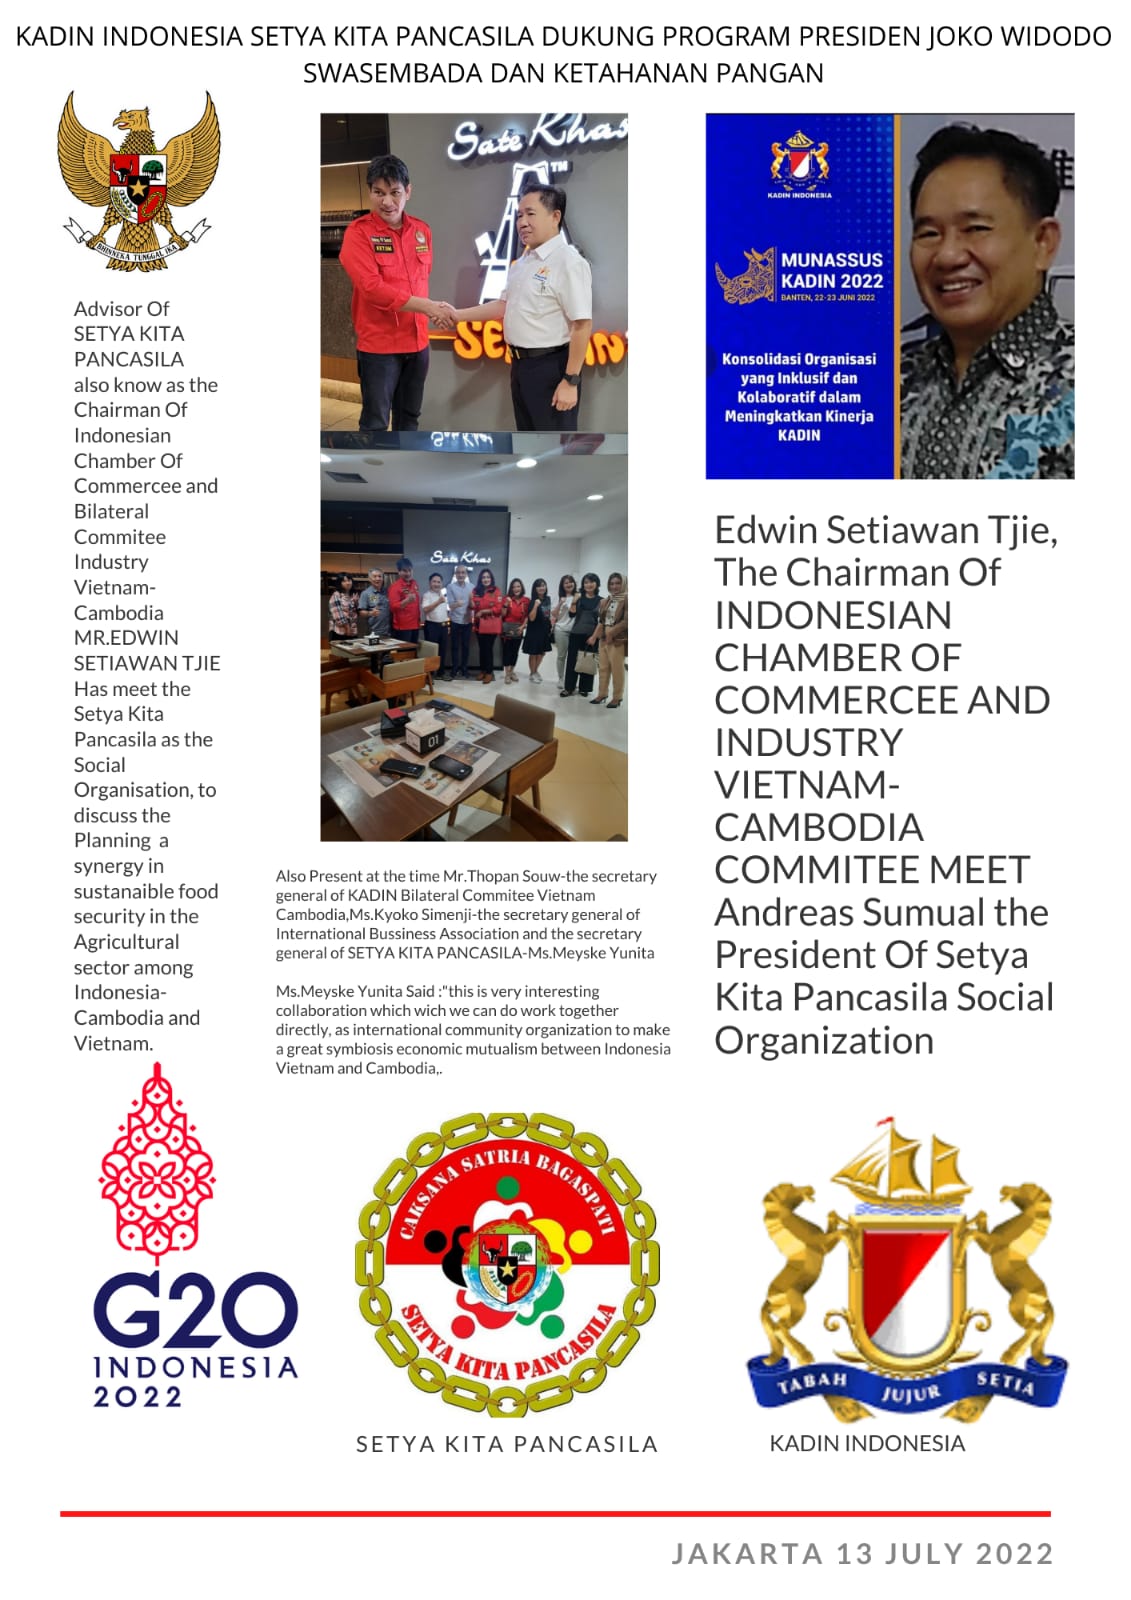 Kadin Indonesia Dan Setya Kita Pancasila Sepakat Dukung Program Presiden Joko Widodo